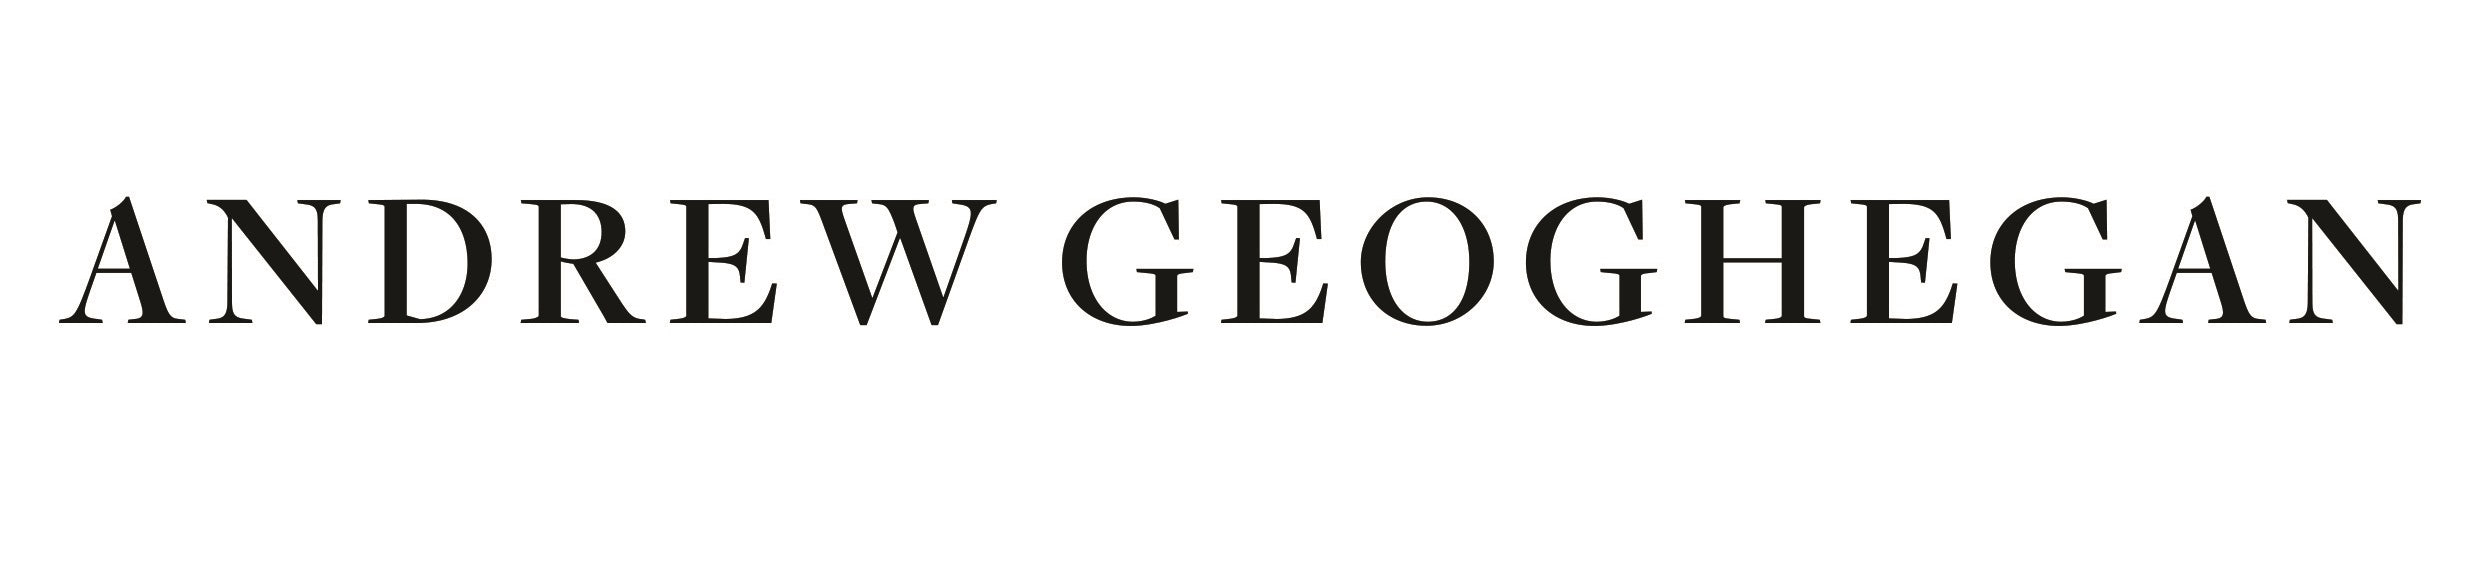 Andrew Geoghegan Award Winning British Jewellery Designer